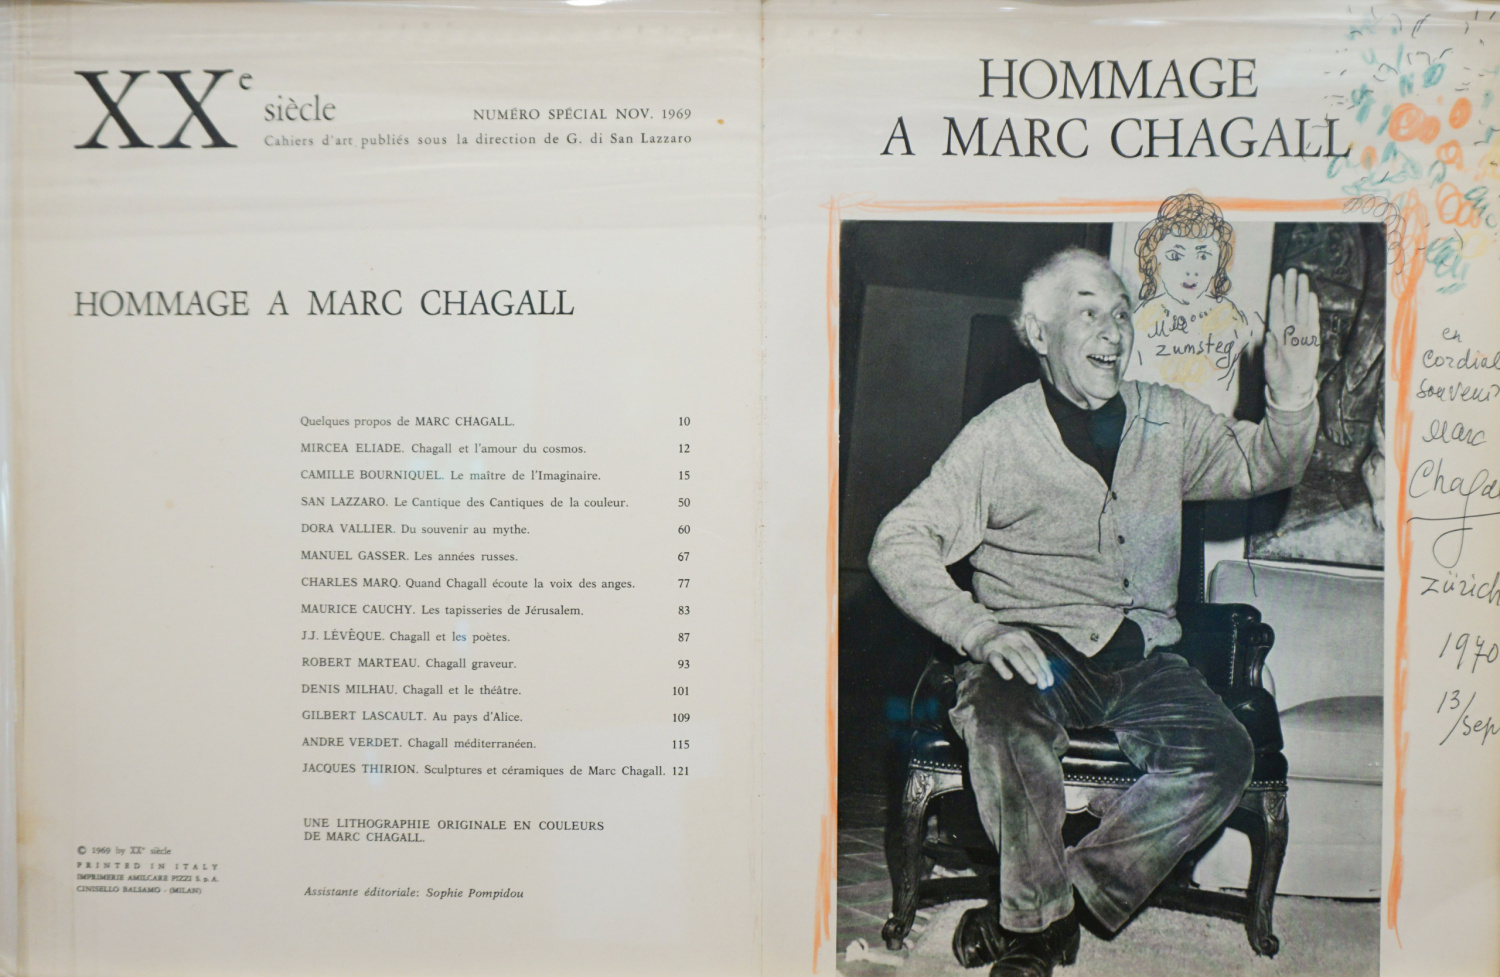 marc chagall - Tree sketch on a hommage book - Kings Gallery -Jerusalem - International art - Fine Art.